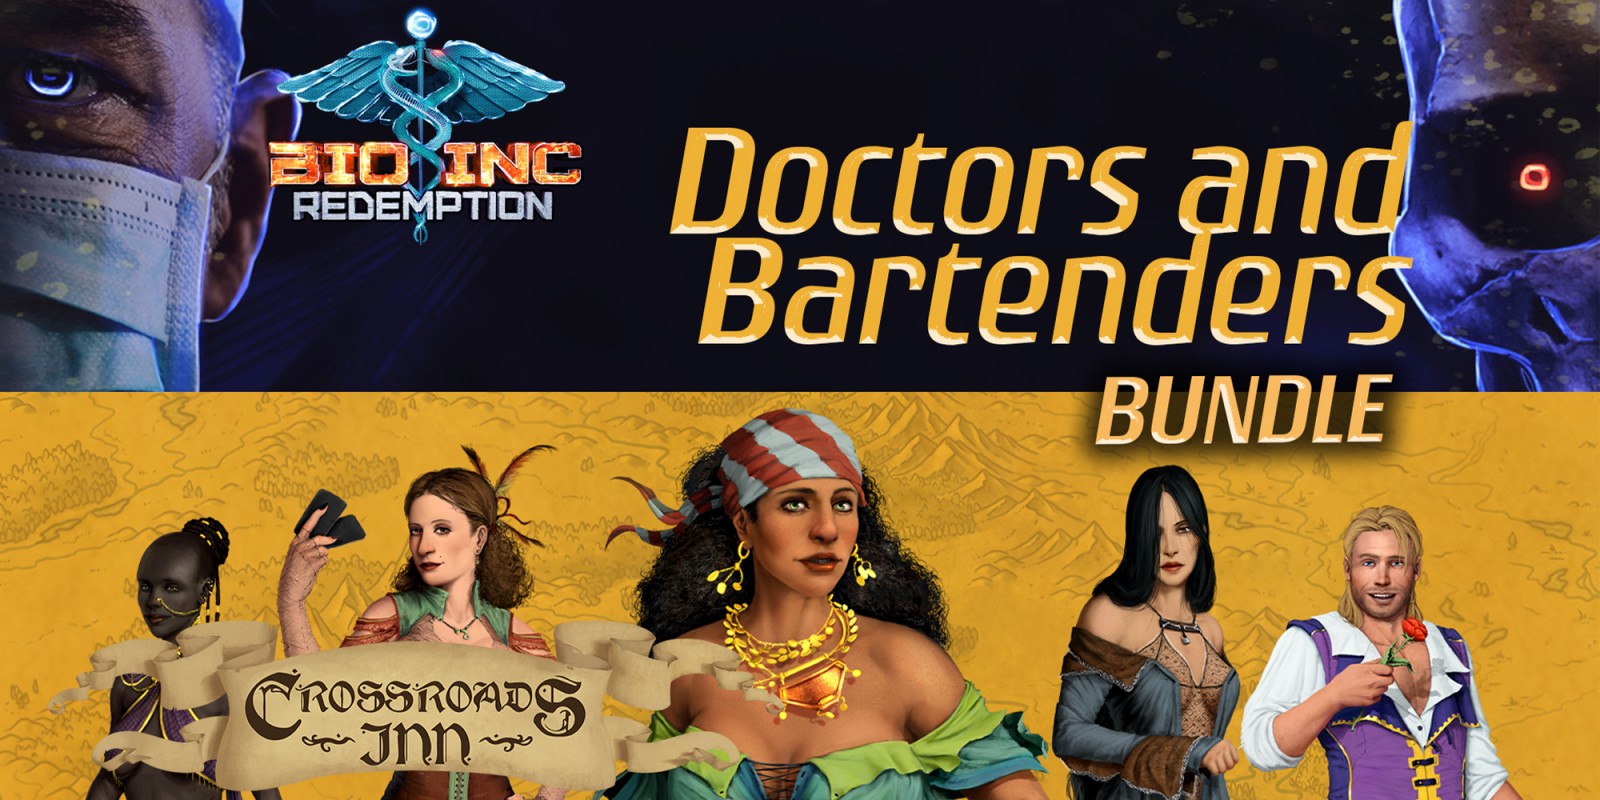 Doctors and Bartenders Bundle - Bio Inc. Redemption + Crossroads Inn